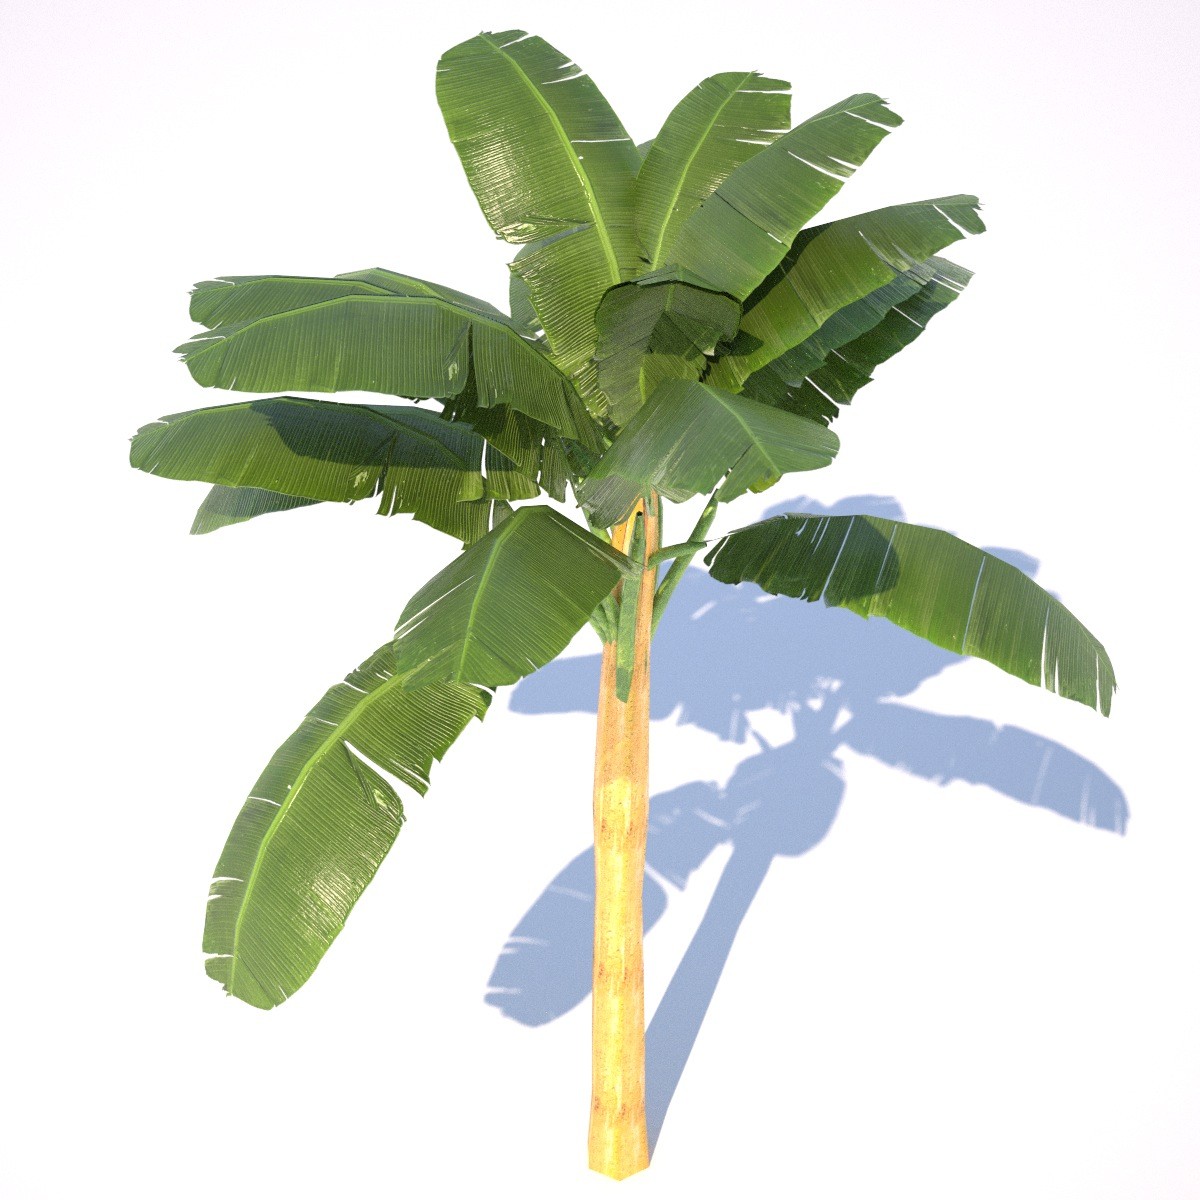 Free Banana Tree Image Download Free Clip Art Free Clip Art On